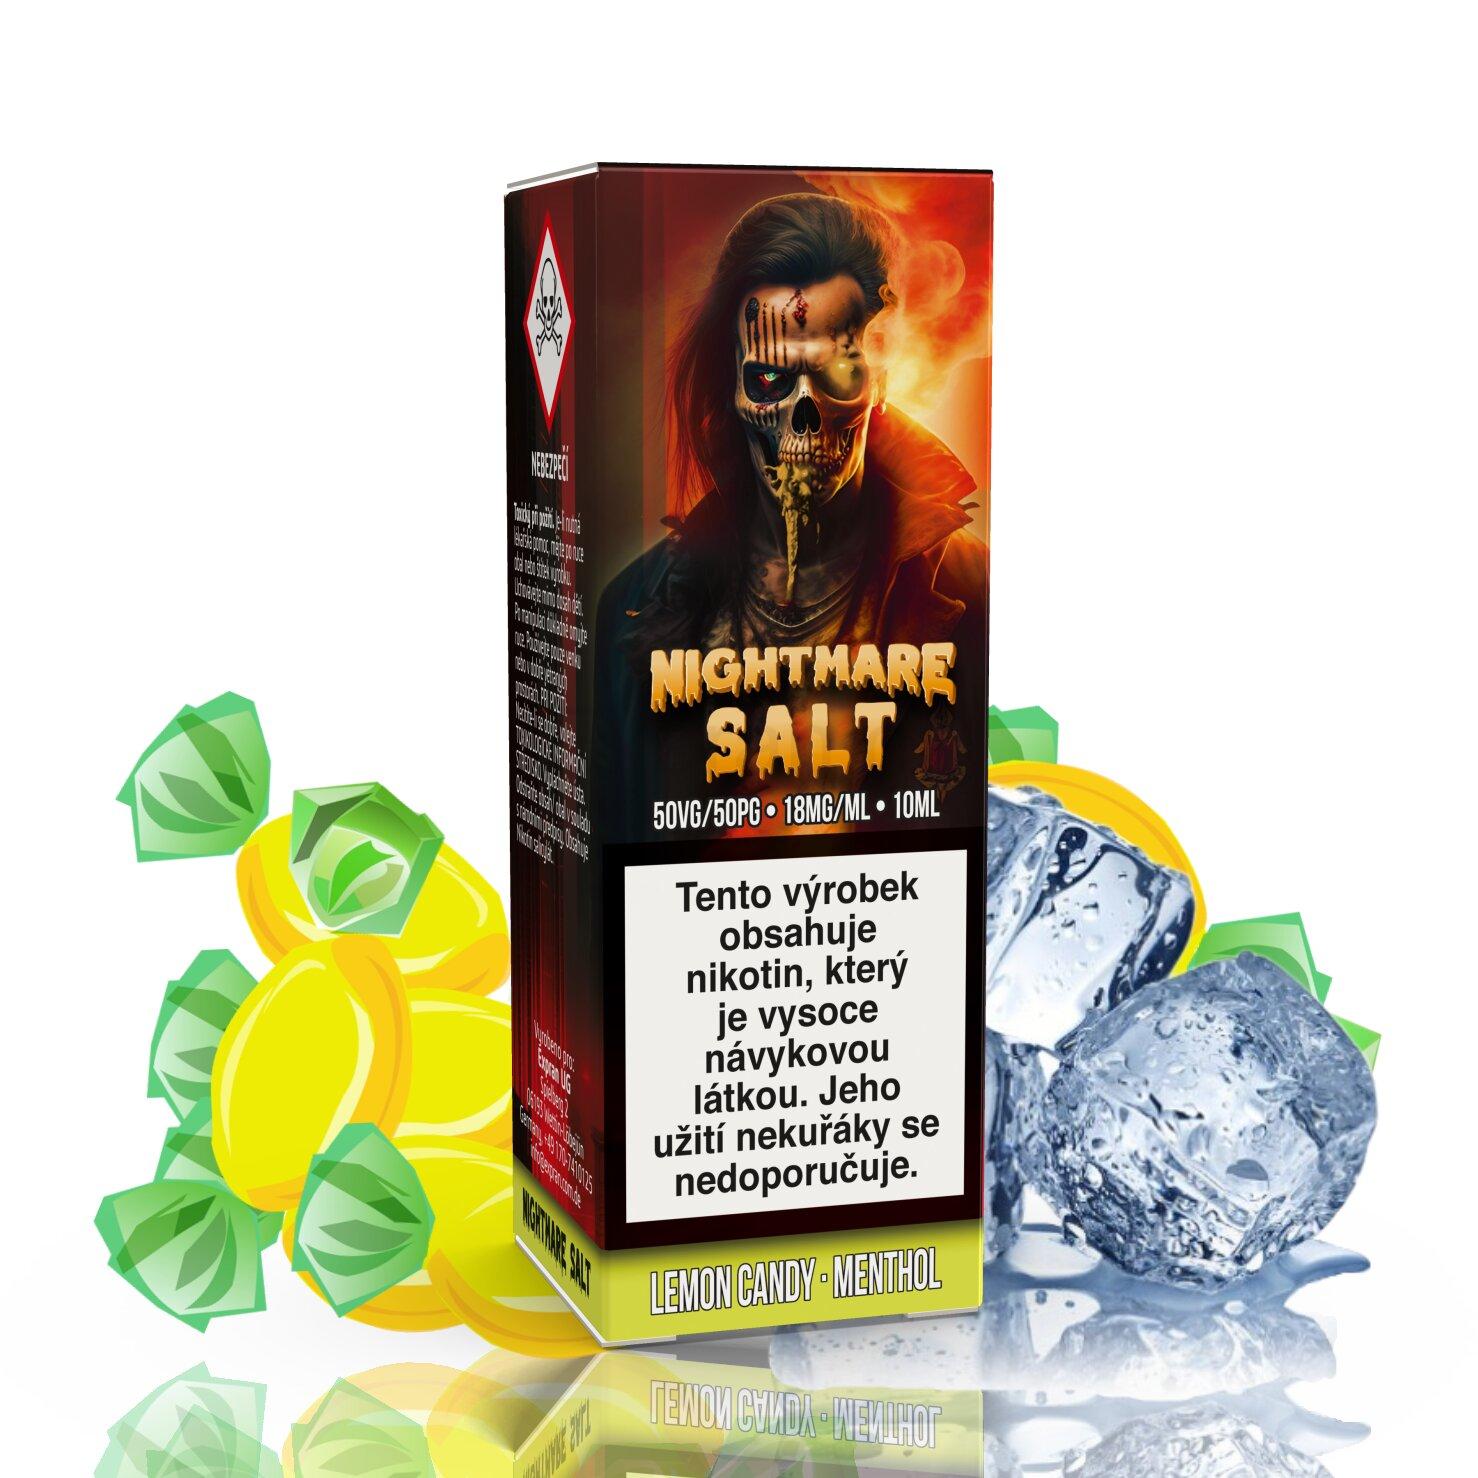 Expran Gmbh (DE) Lemon Candy Menthol - Nightmare SALT - (50PG/50VG) 10ml Množství: 10ml, Množství nikotinu: 18mg